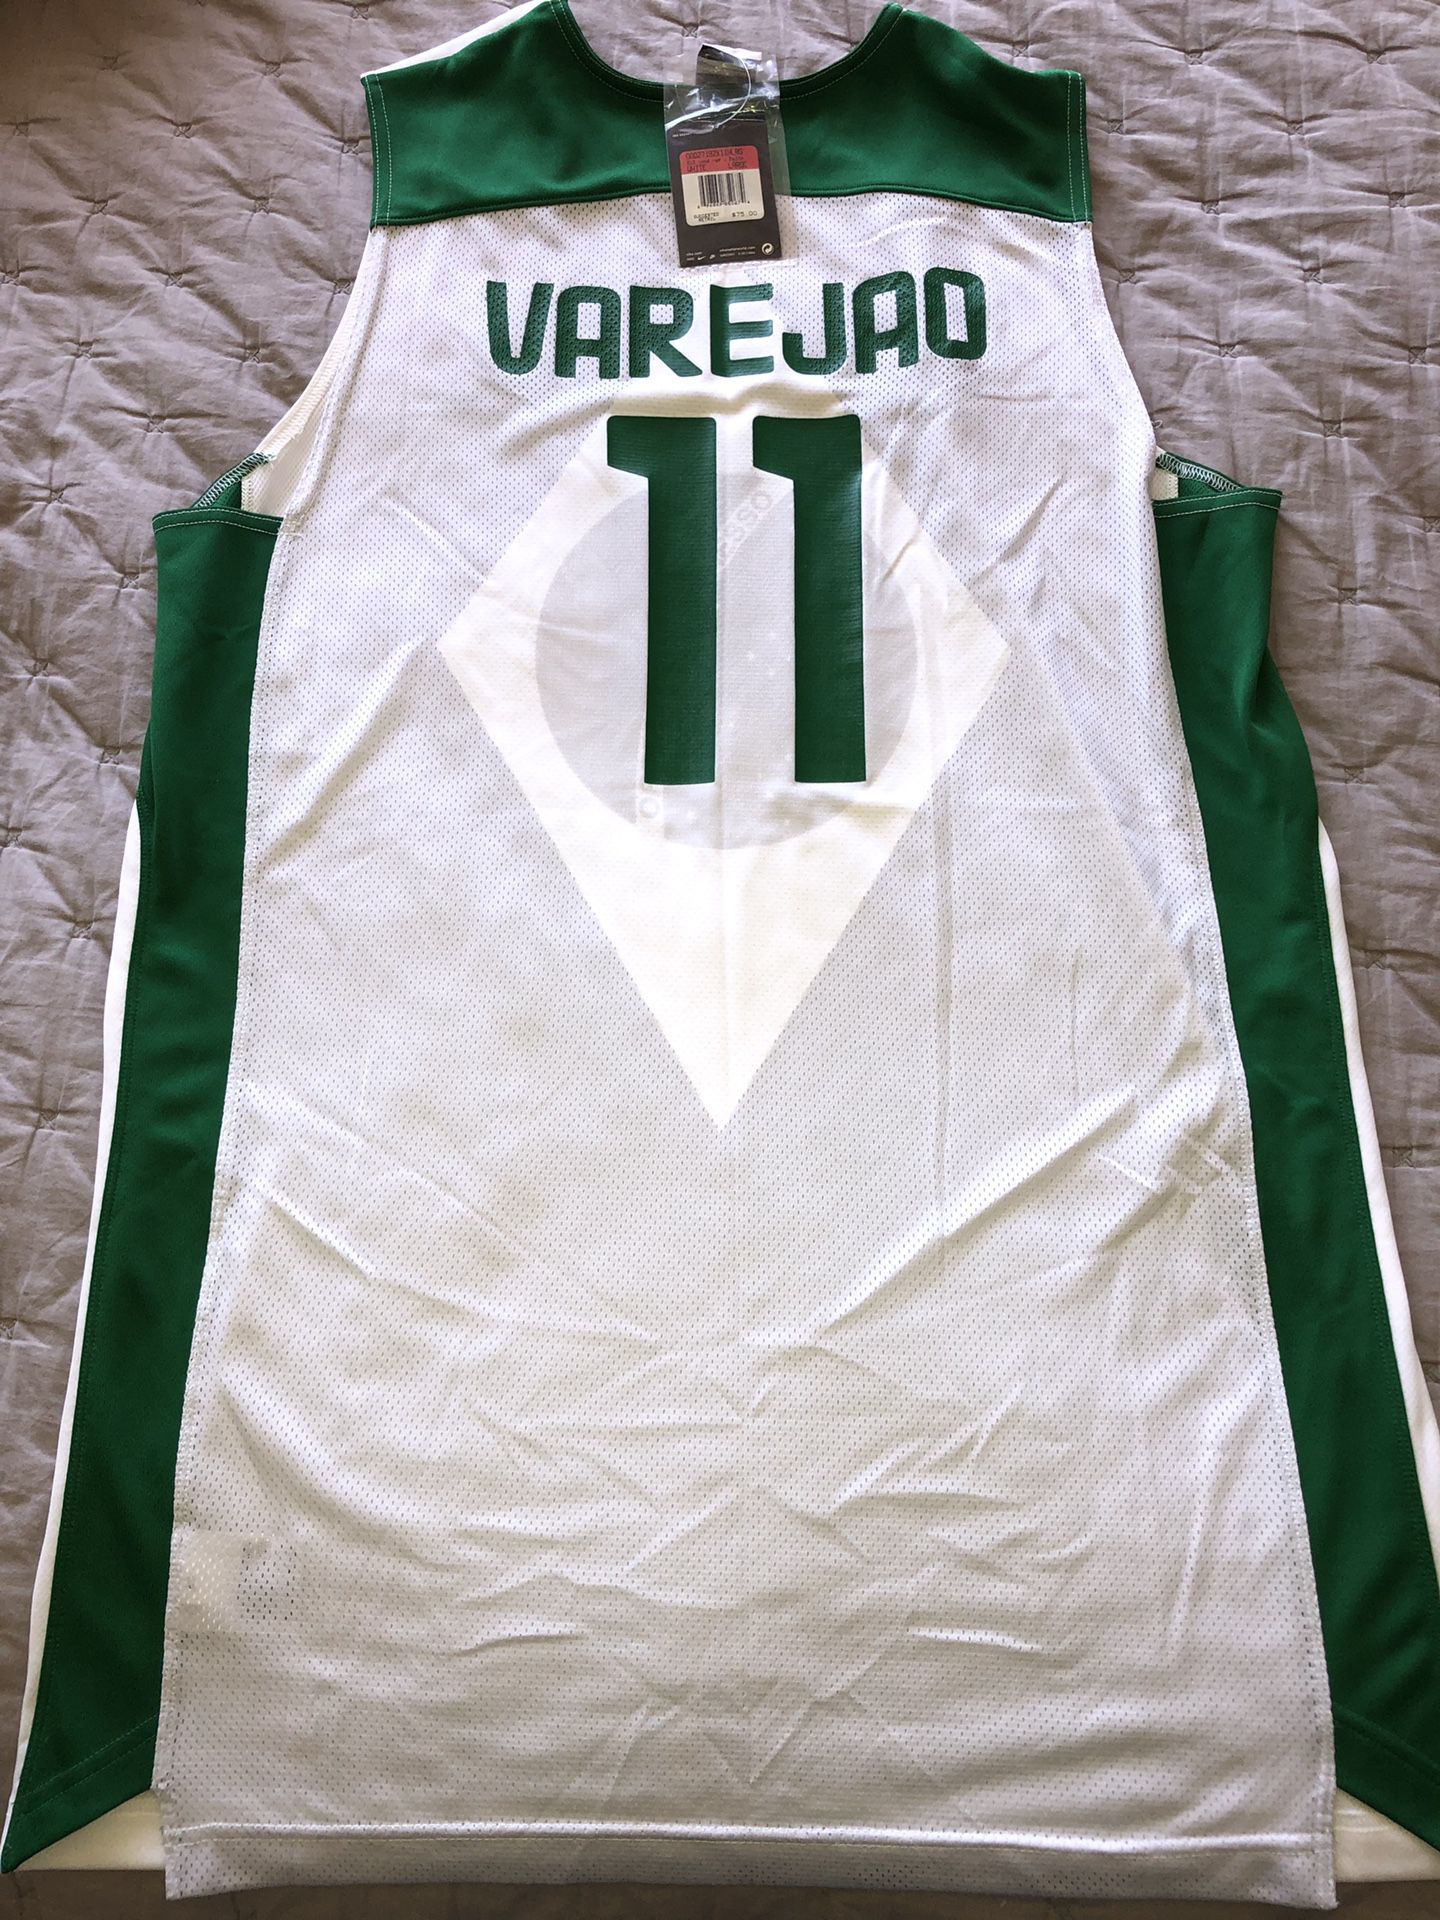 🏀 Anderson Varejao Brazil Basketball Jersey Size Small – The